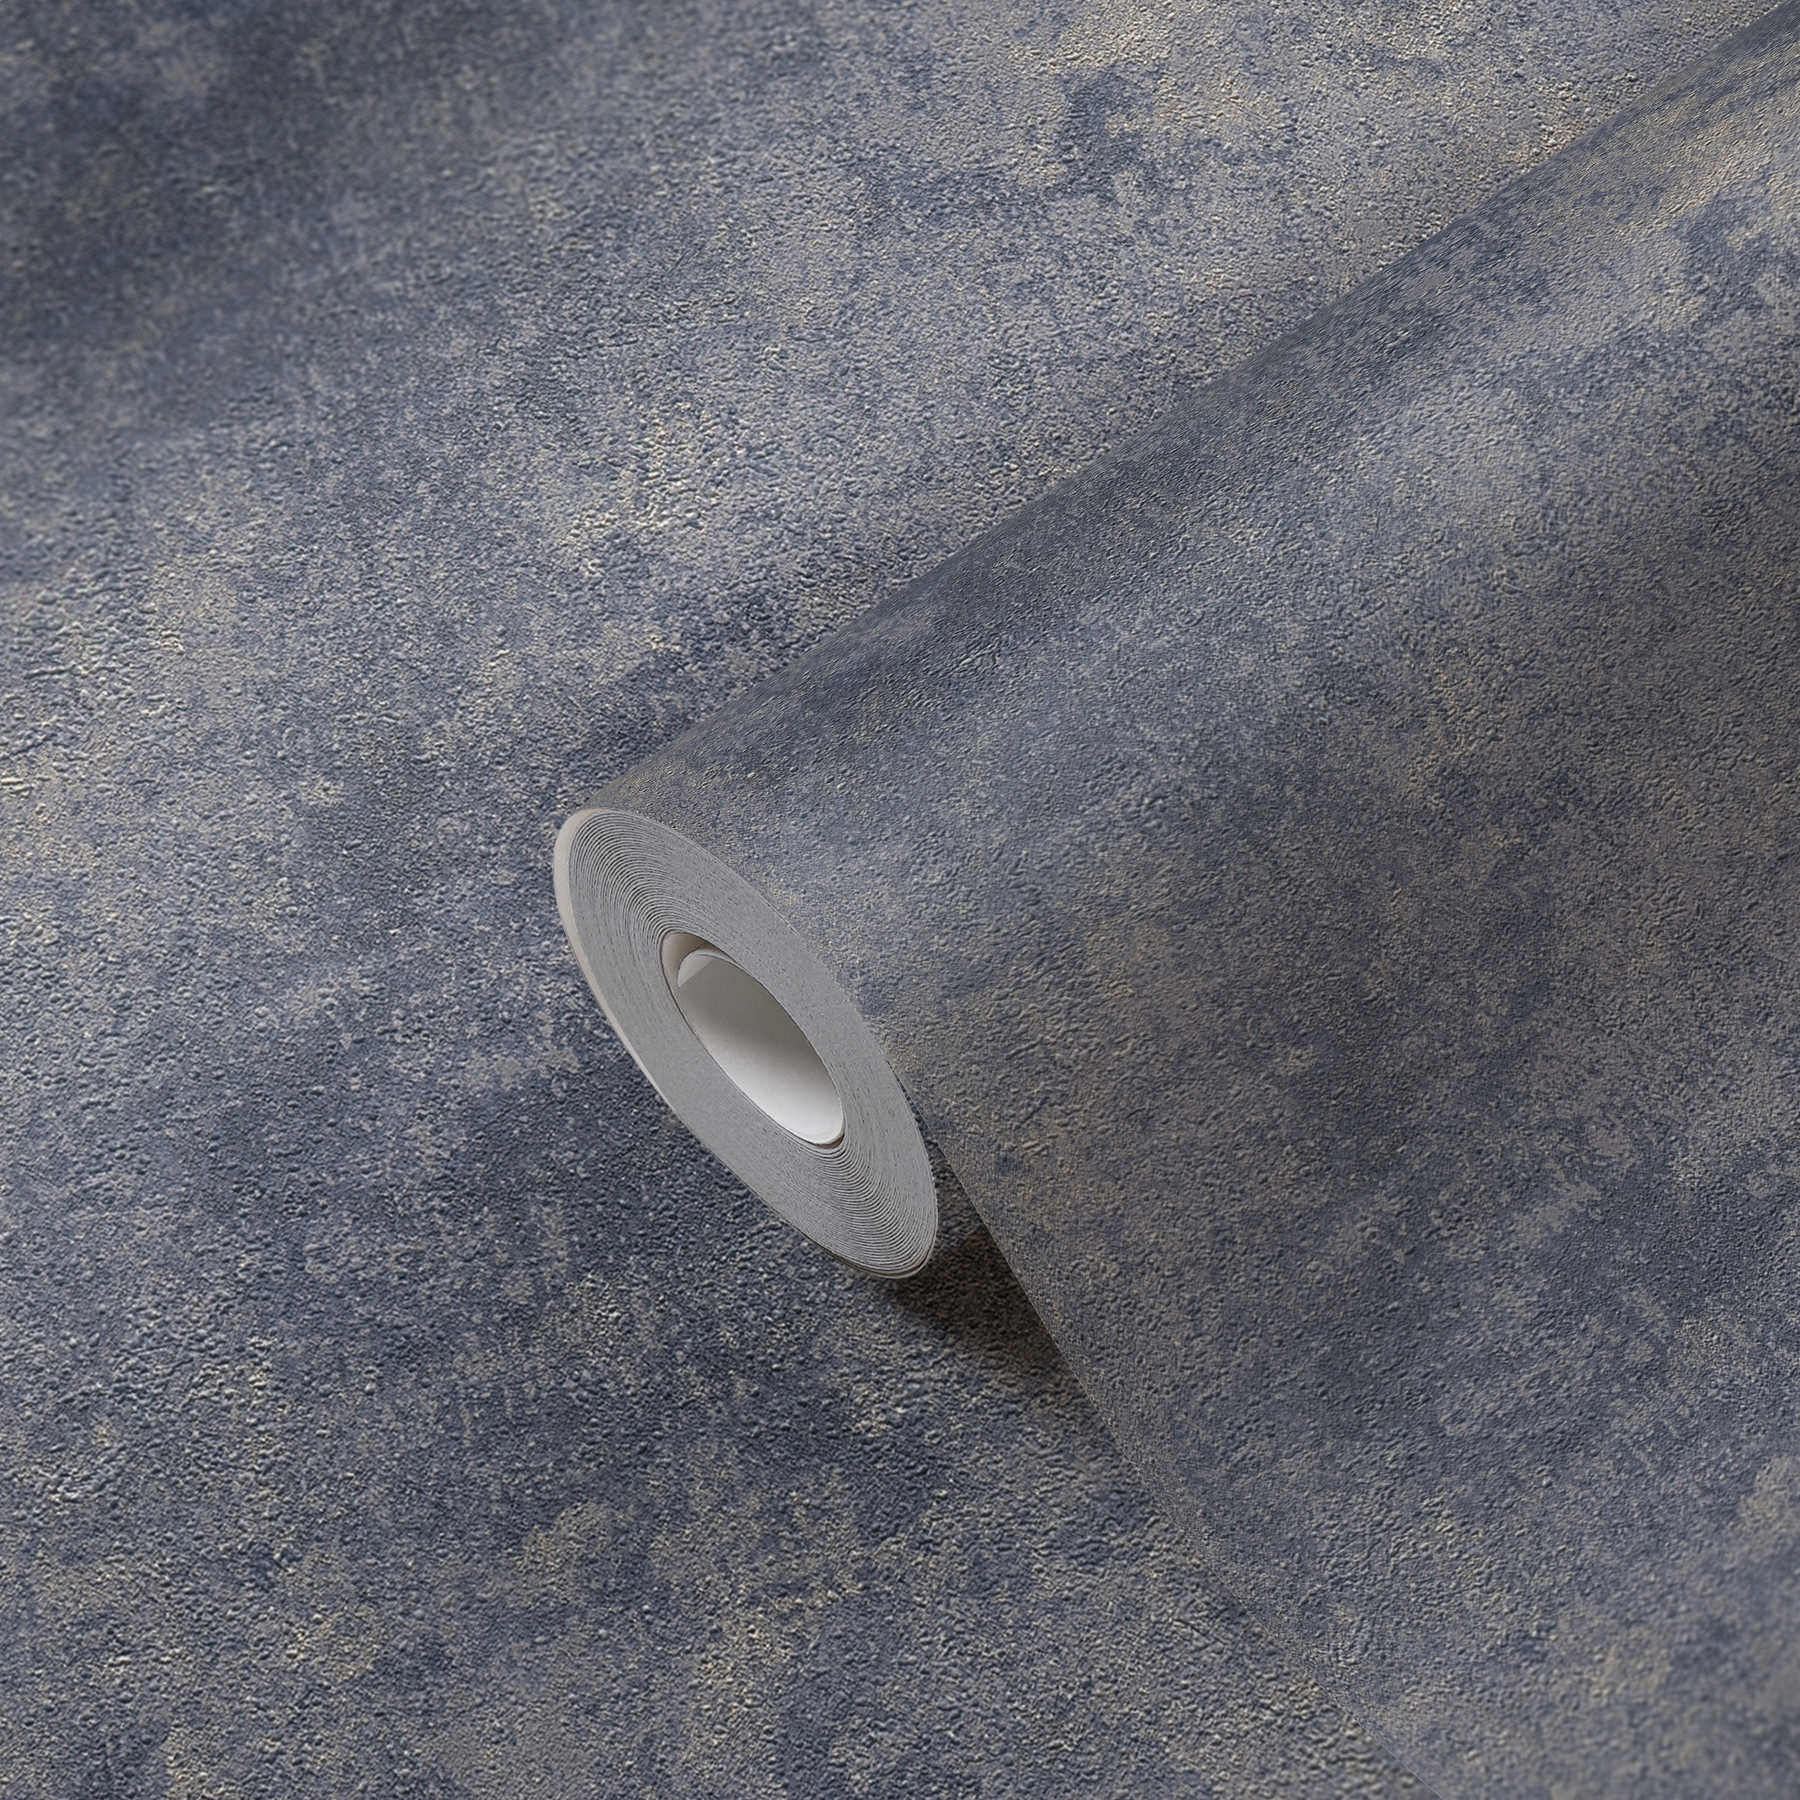             wallpaper rough structure & gloss effect - blue, silver, grey
        